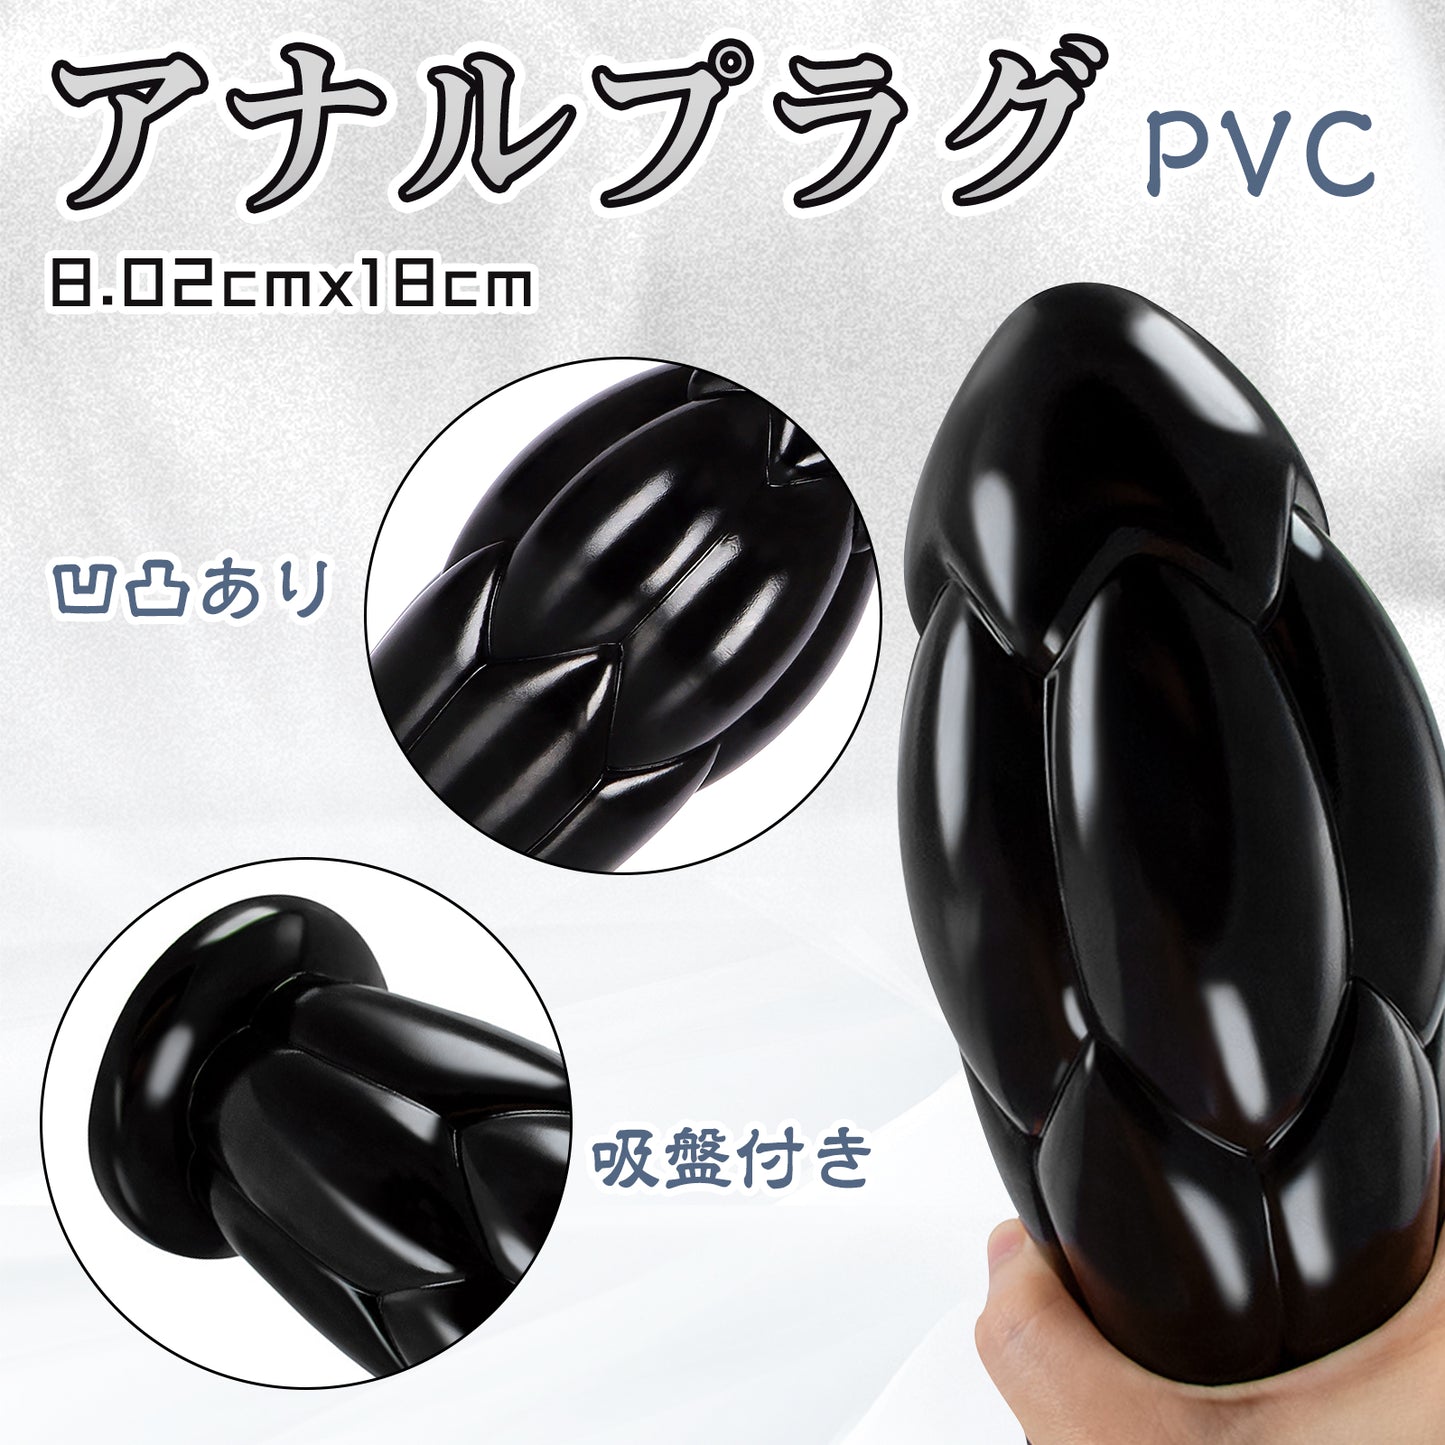 Maparon Anal Plug Anal Development G Spot Stimulation PVC Black 8.02cmx18cm